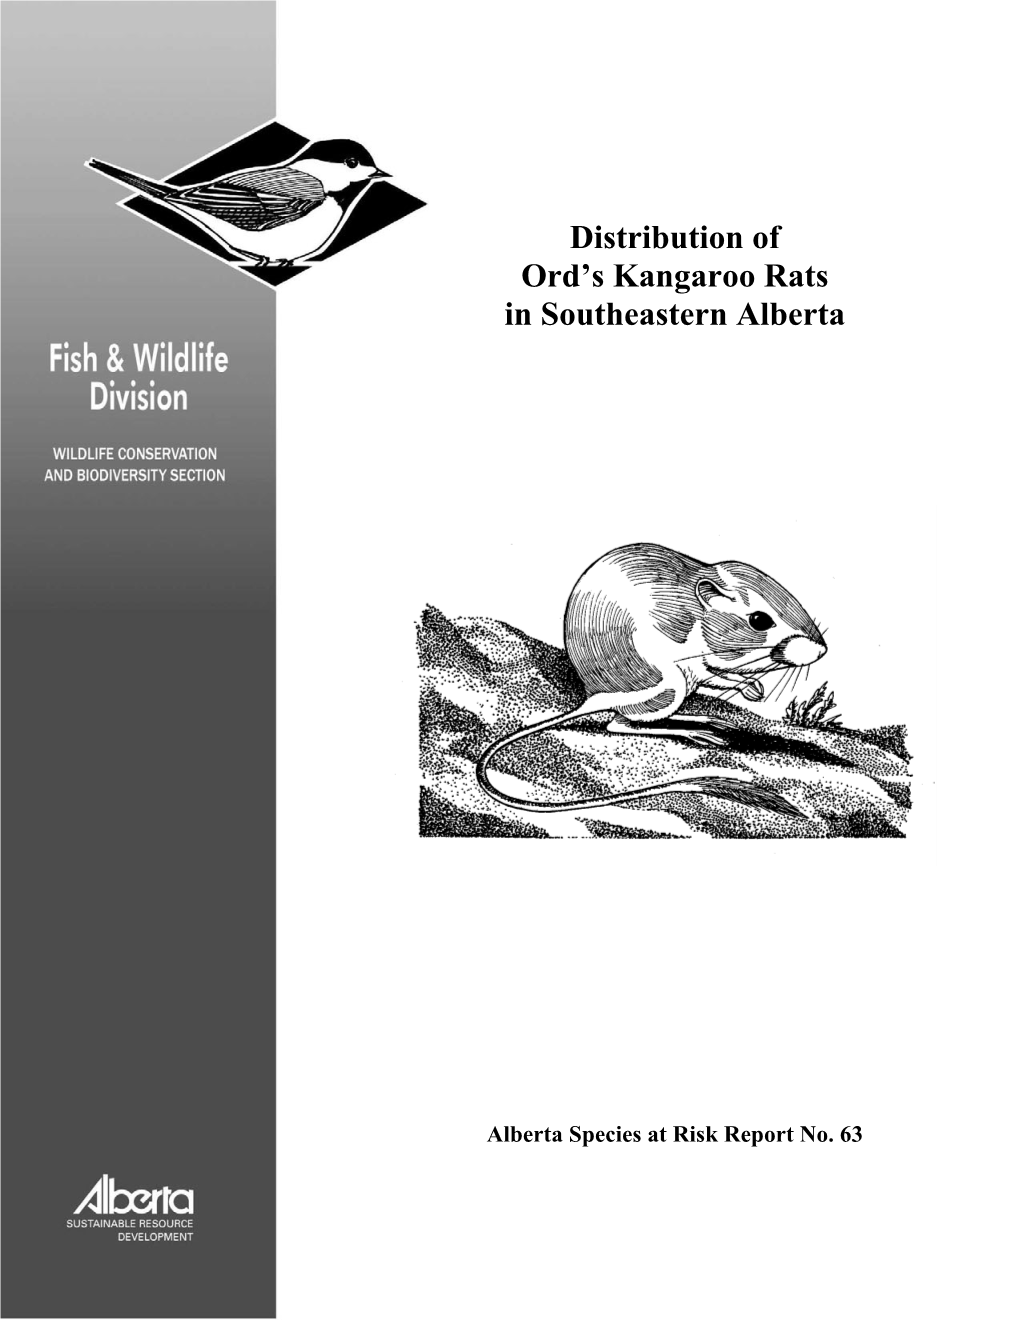 Distribution of Ord's Kangaroo Rats in Southeastern Alberta